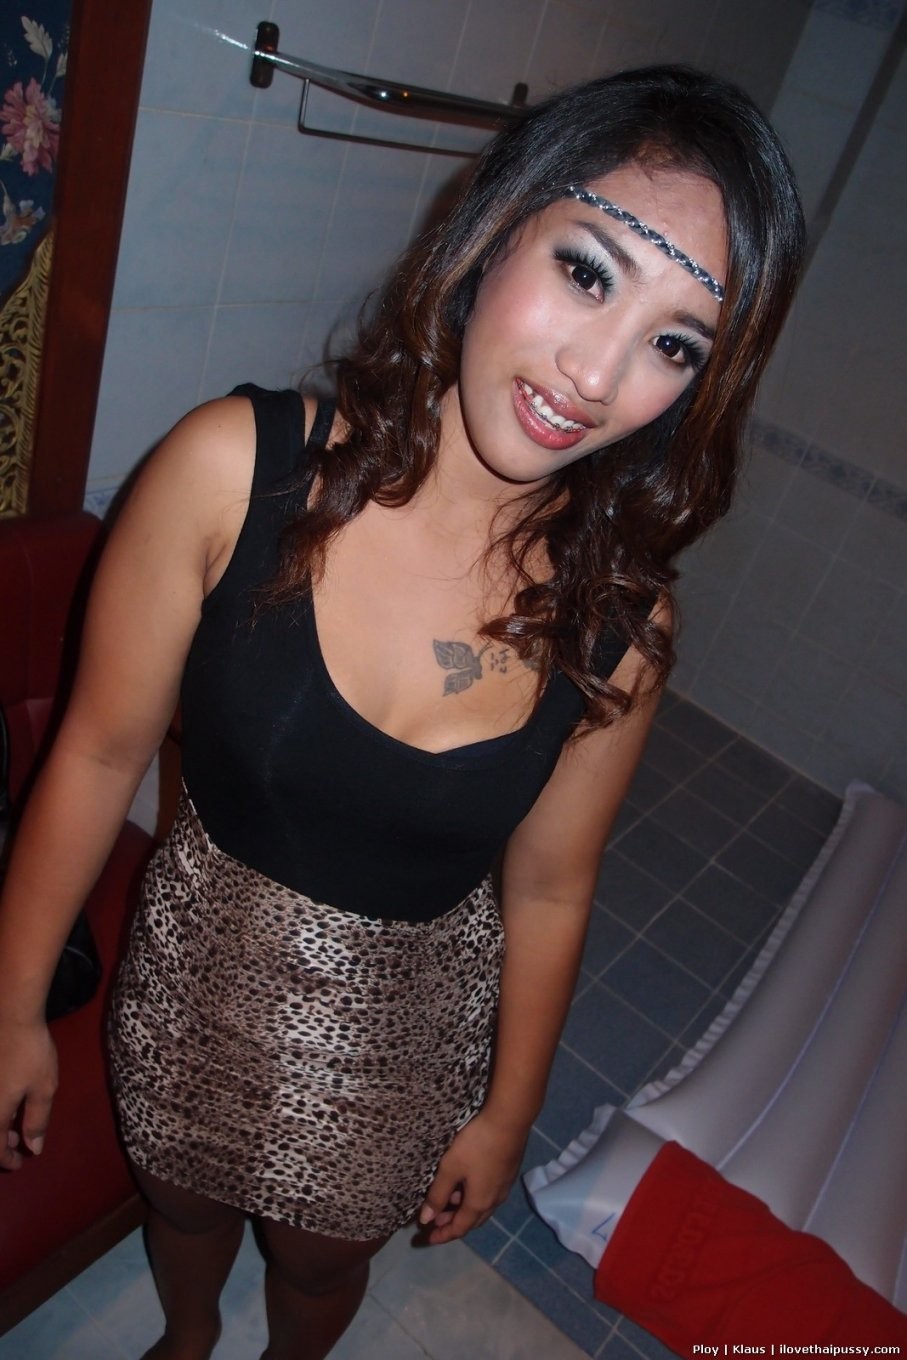 Grande bottino bangkok prostituta penetrata senza preservativo bareback per soldi puttana asiatica
 #68460834